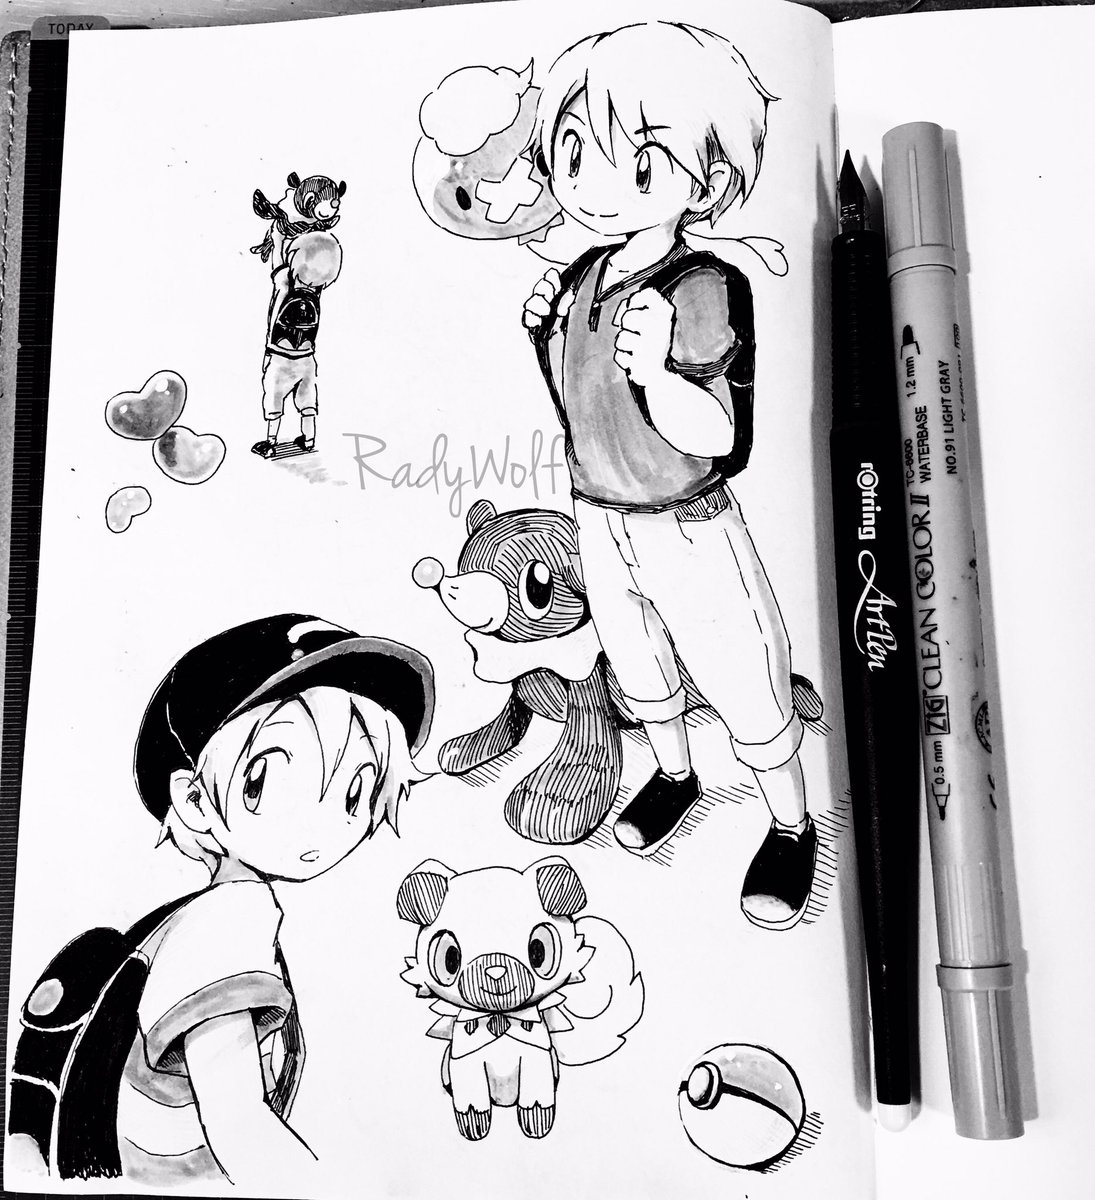 Pokémon sun and moon my team sketch
フワンテとアシマリ、イワンコで 始めました?
#ポケモン #pokemon #penandinkdrawing 